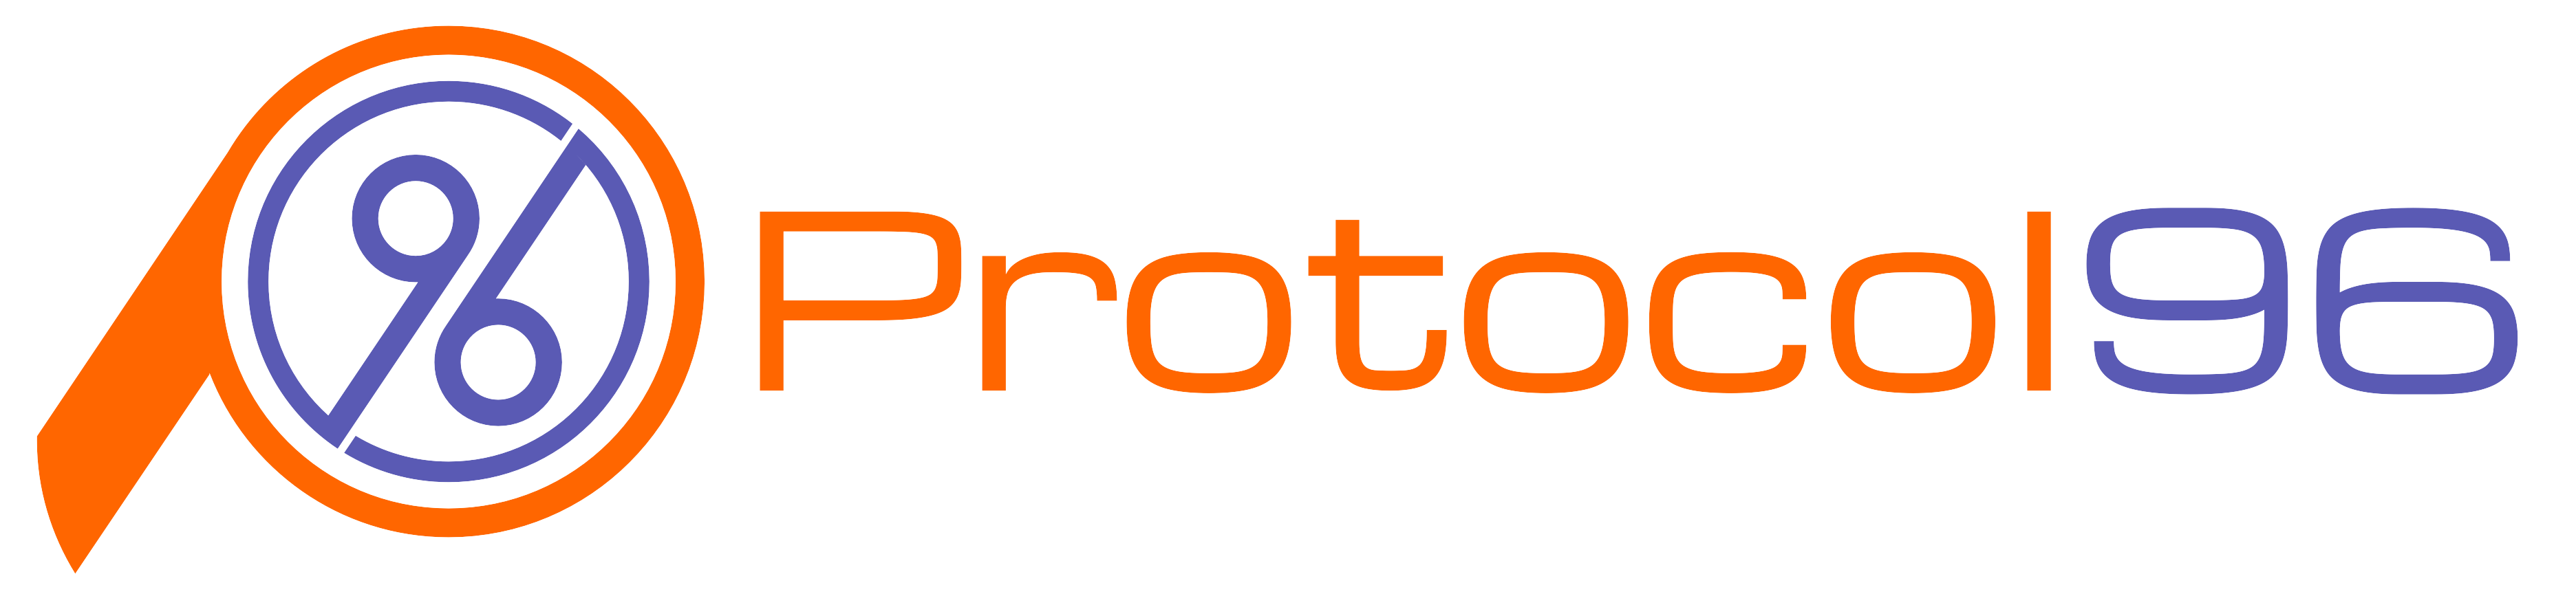 Protocol96 LLC | Technology Solutions